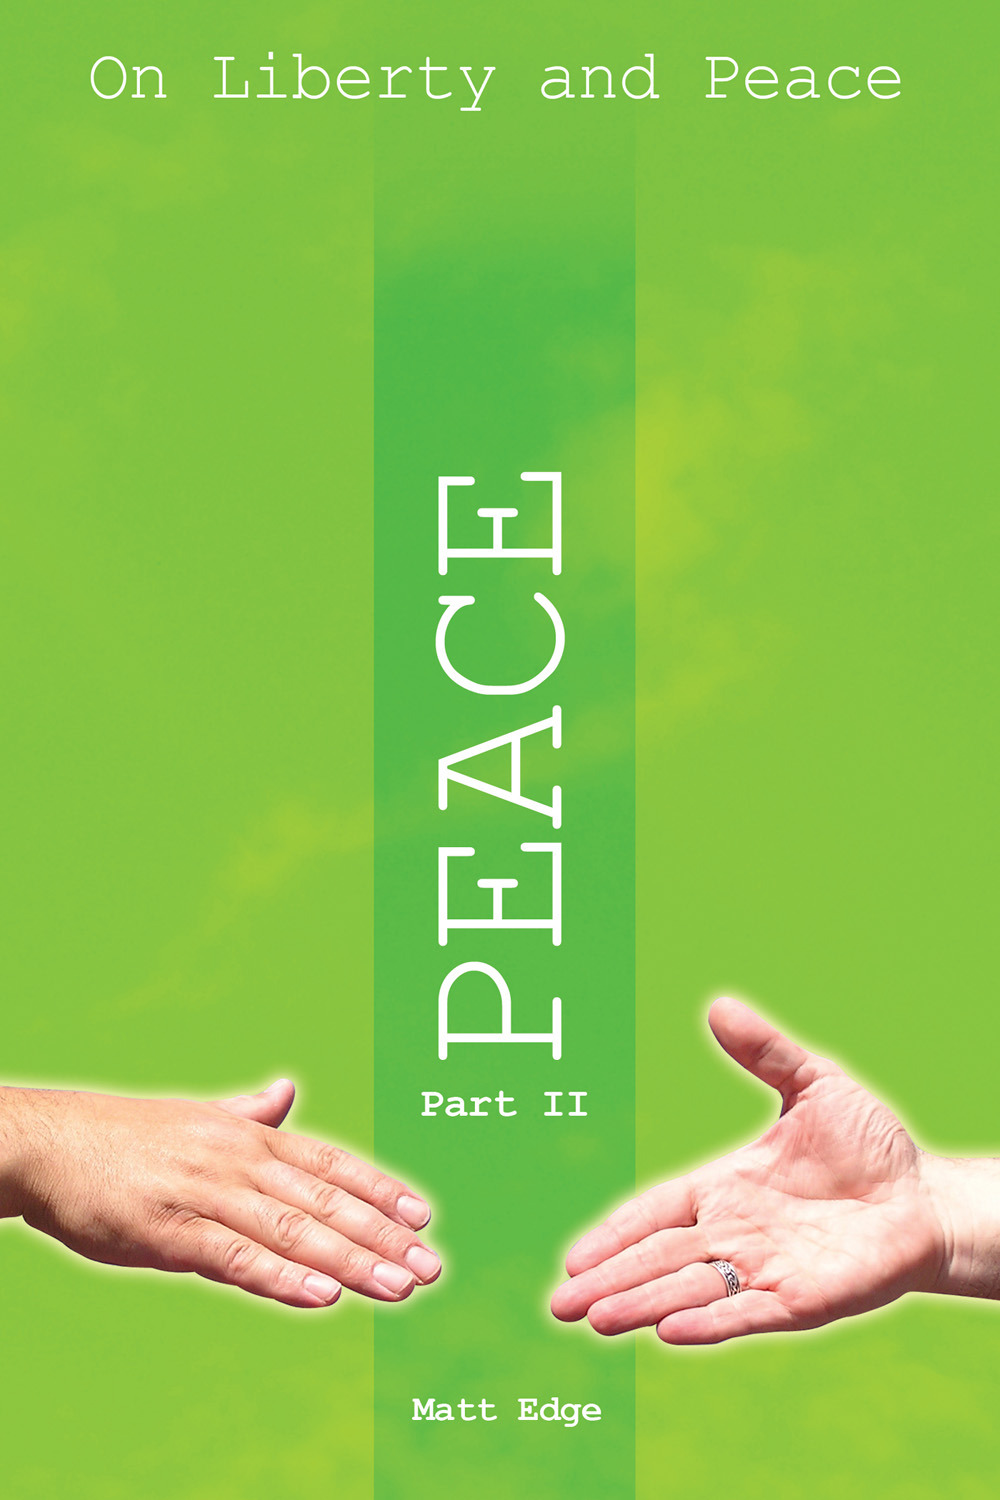 Edge, Matt - On Liberty and Peace - Part 2: Peace, ebook